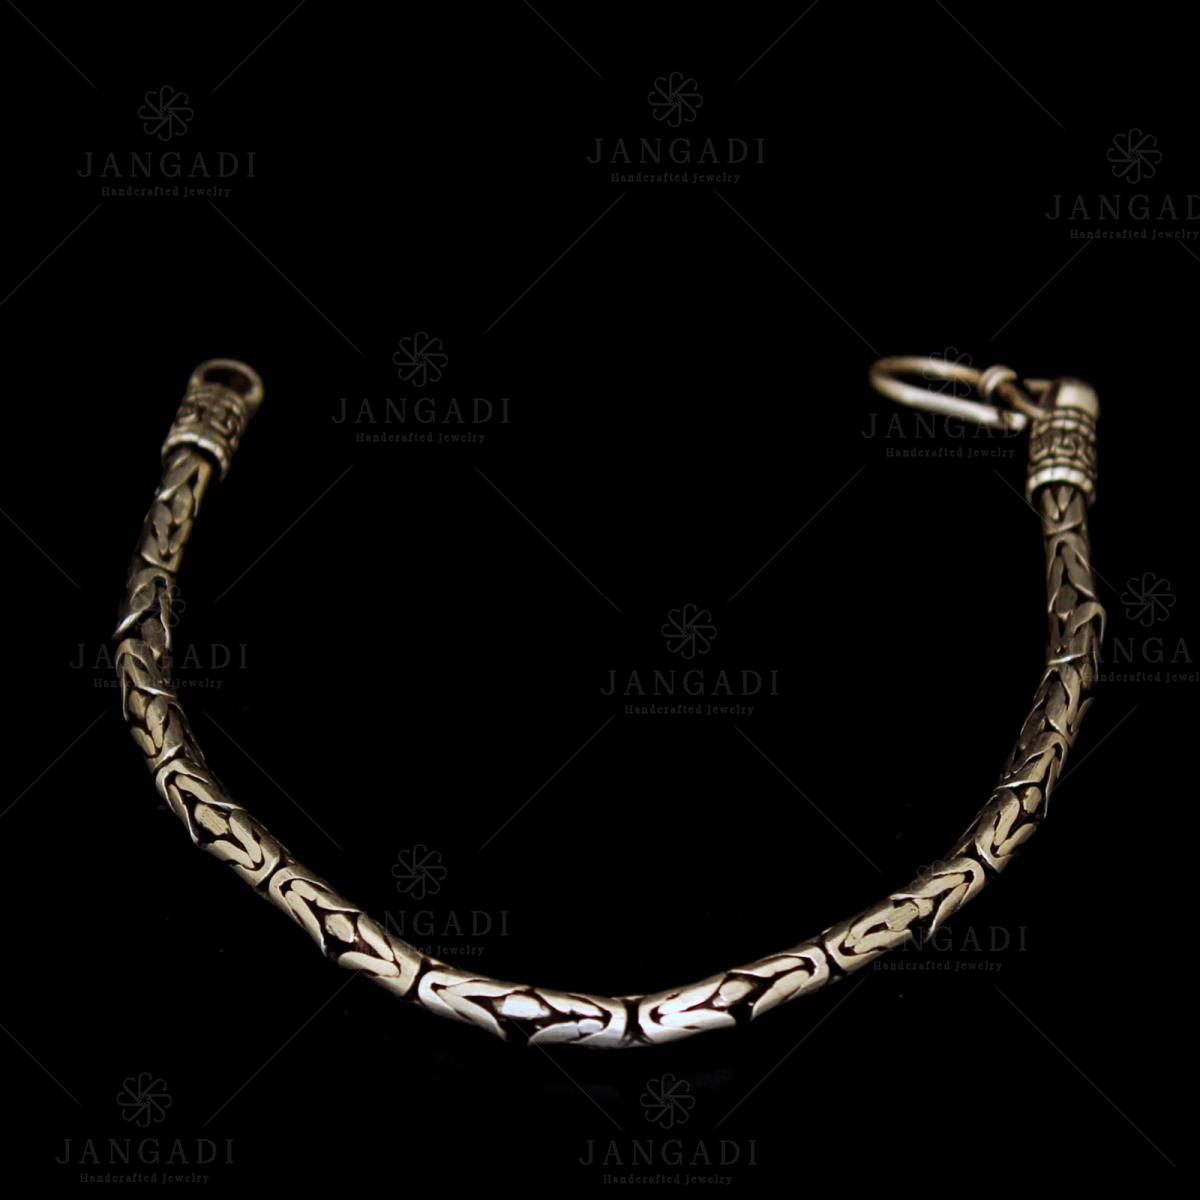 Buy Gold Look Bracelet Design for Men 2 Gram Gold Jewellery